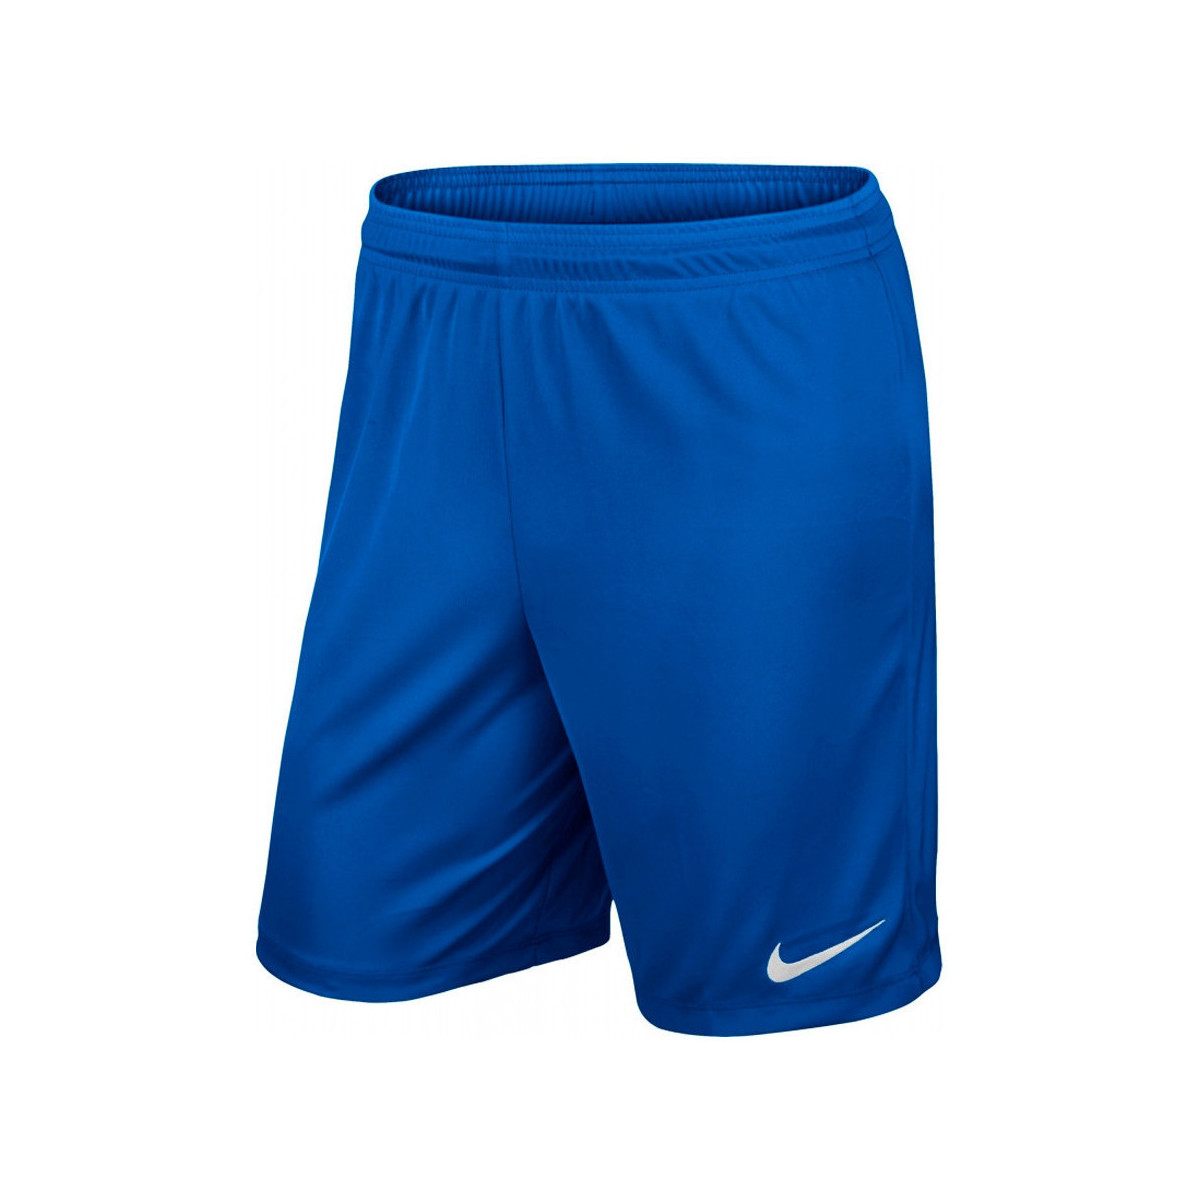 Nike Bleu 725988-463 YmhI1ub8